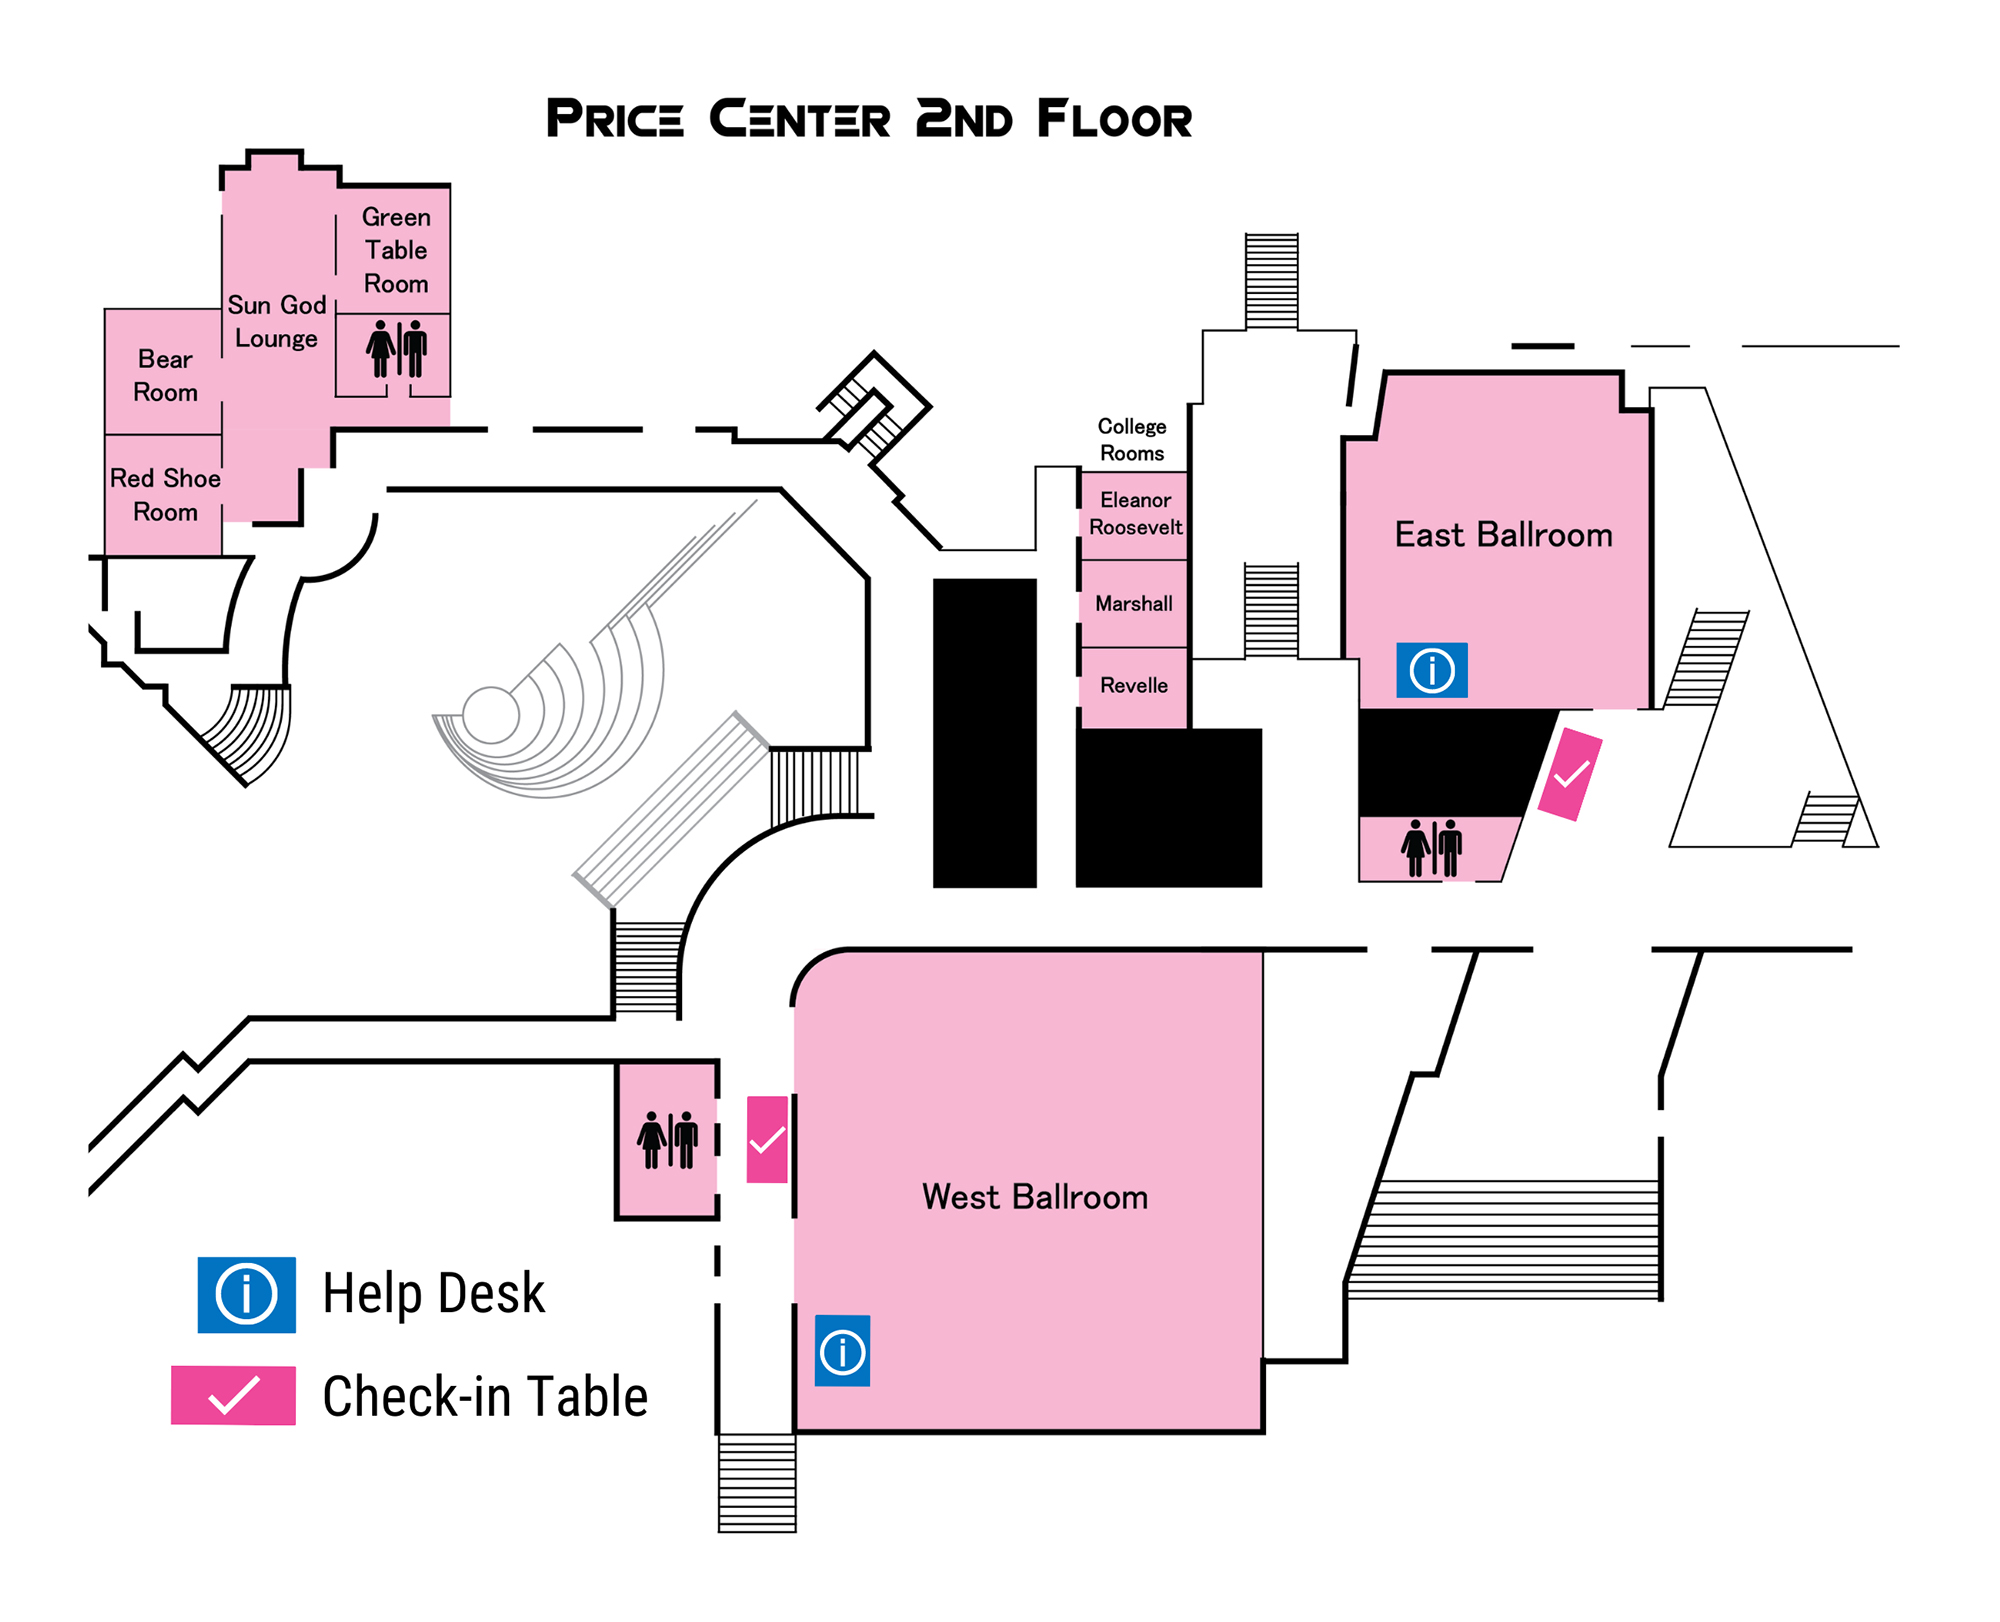 Price Center 2nd Floor map